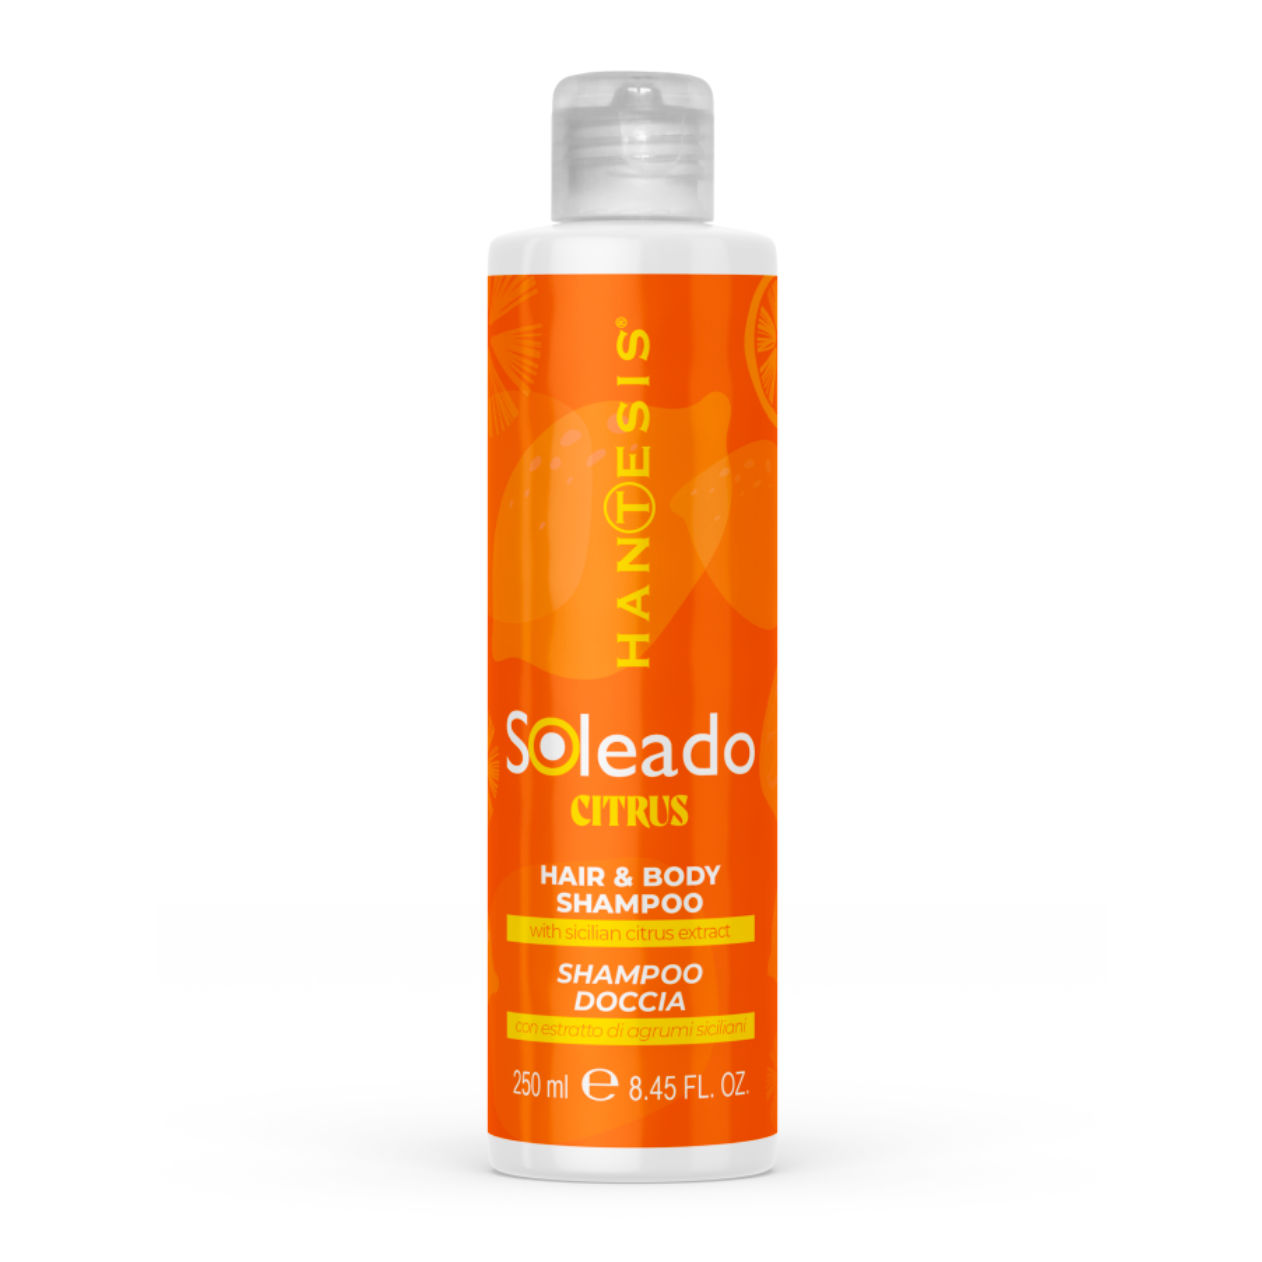 Hantesis Soleado Citrus Hair & Body Shampoo 250ml